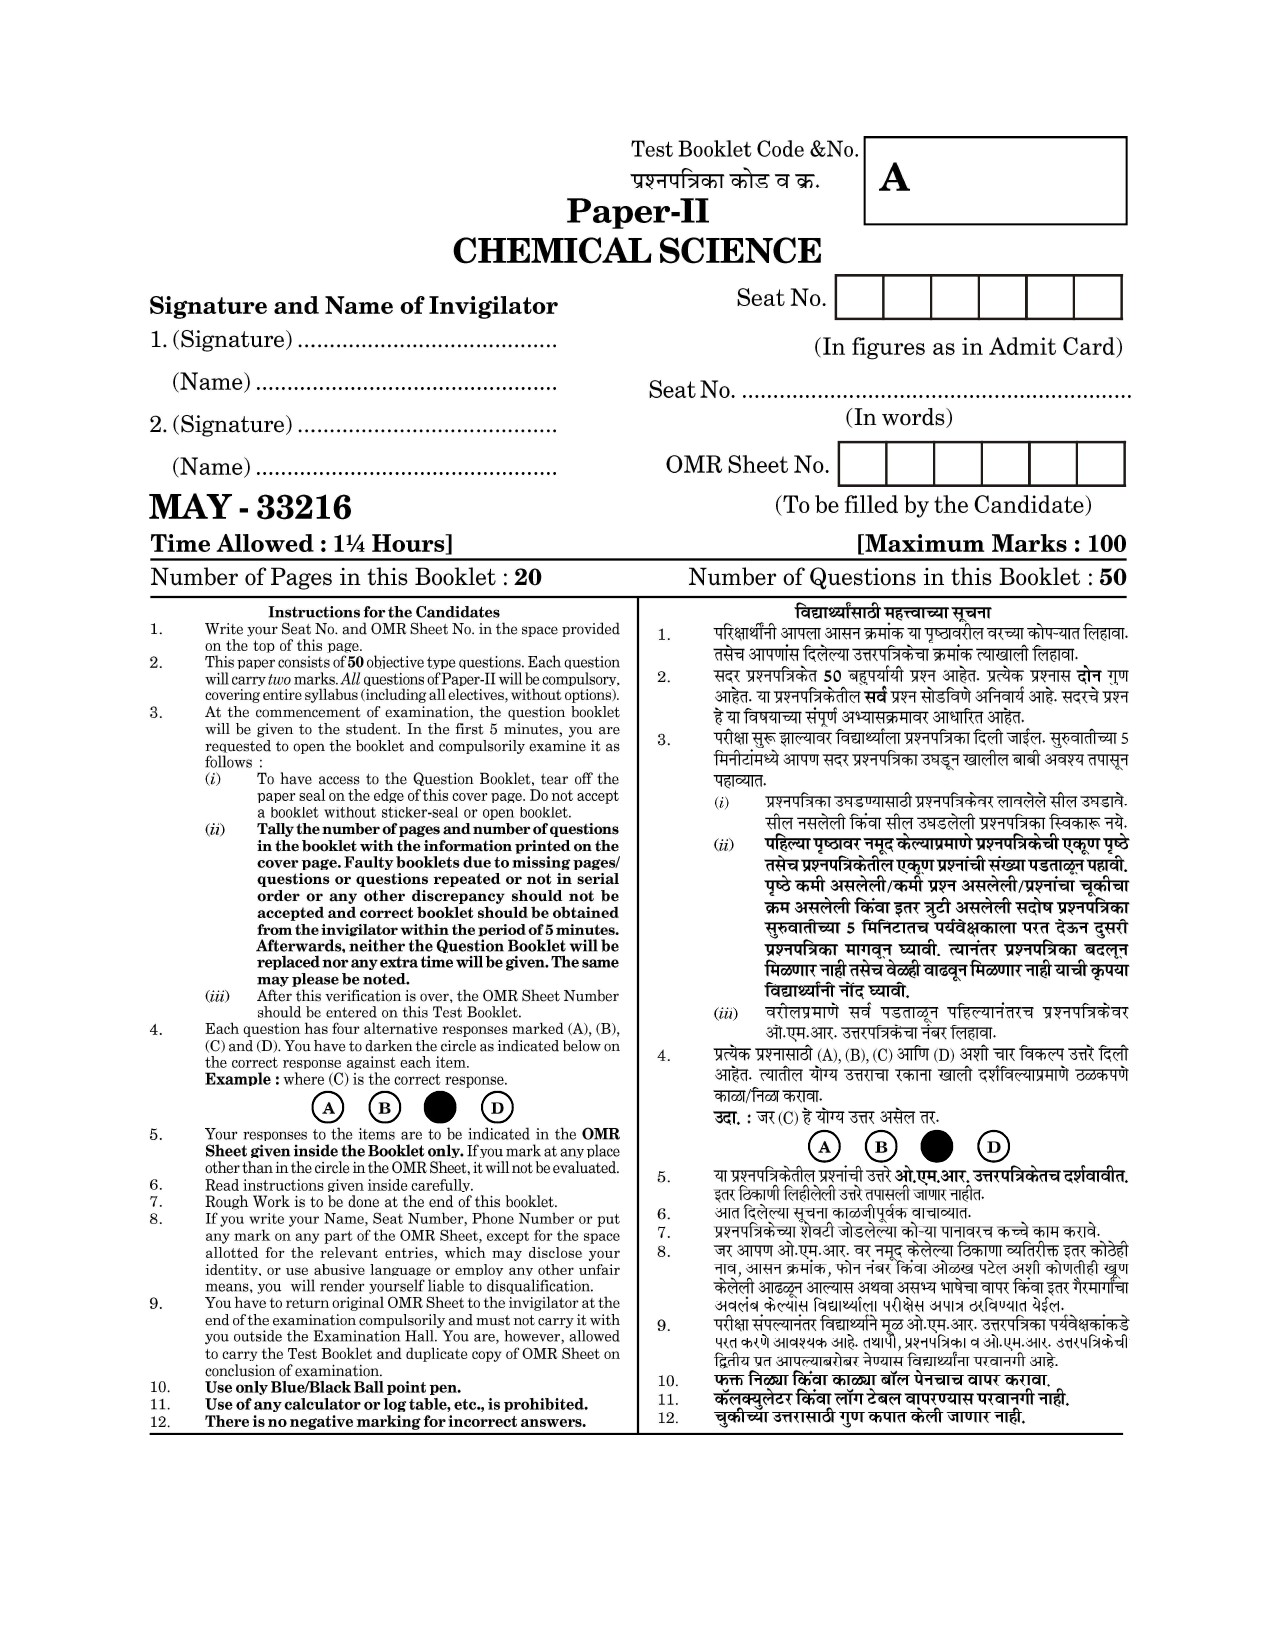 Maharashtra SET Chemical Sciences Question Paper II May 2016 1